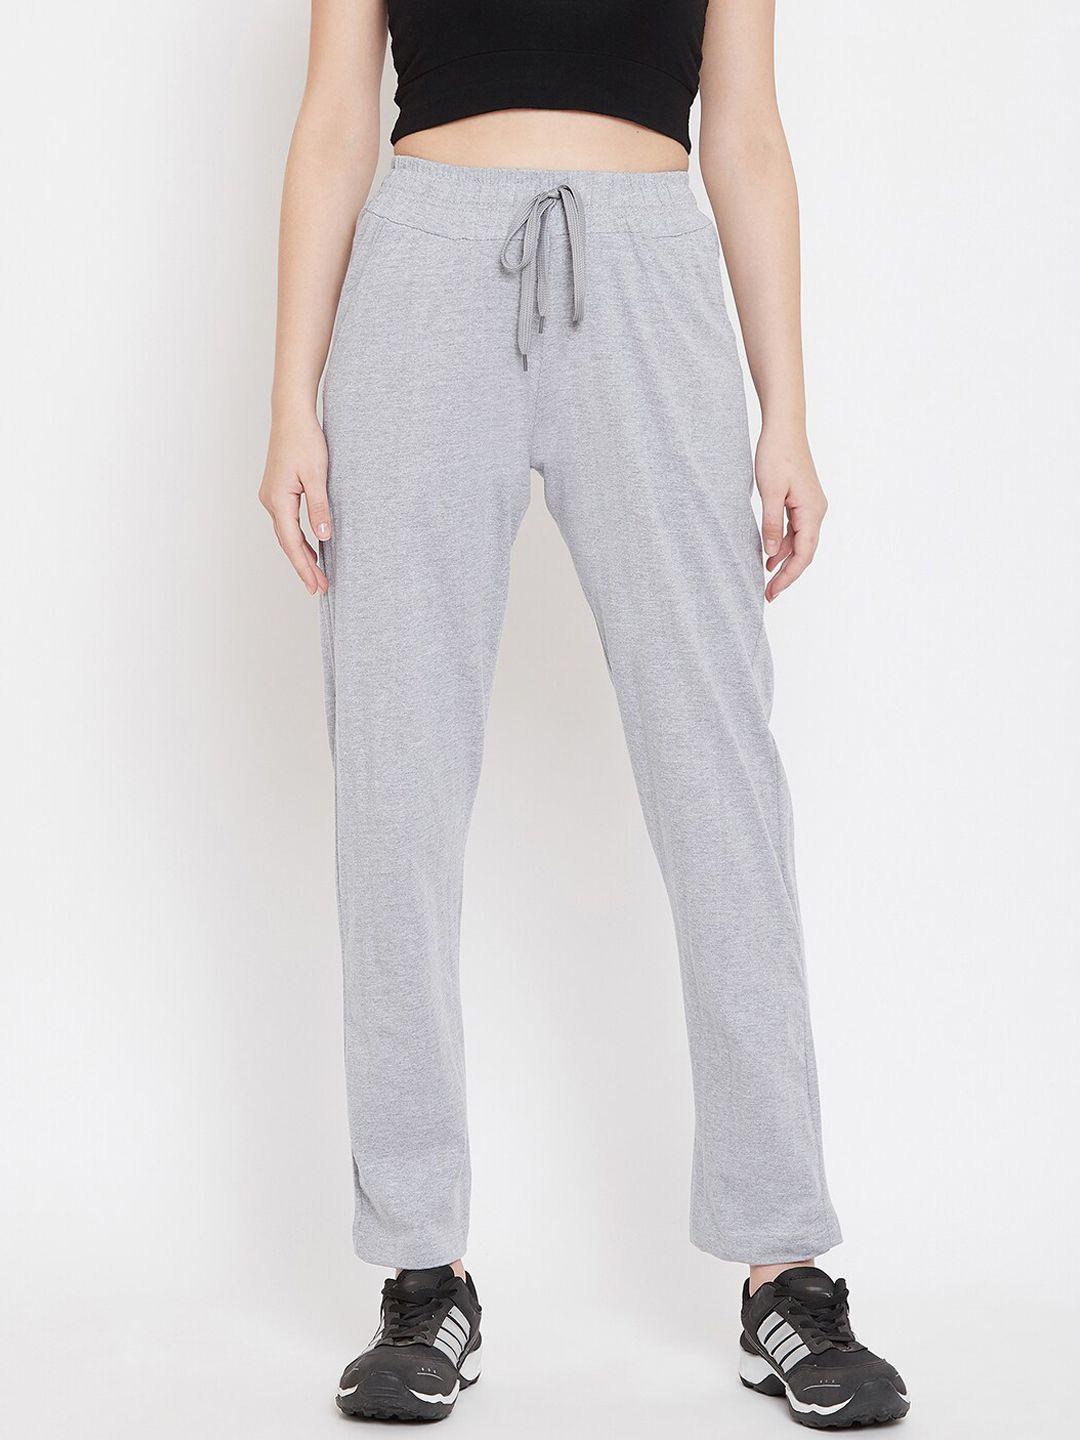 stylestone-women-grey-solid-track-pants